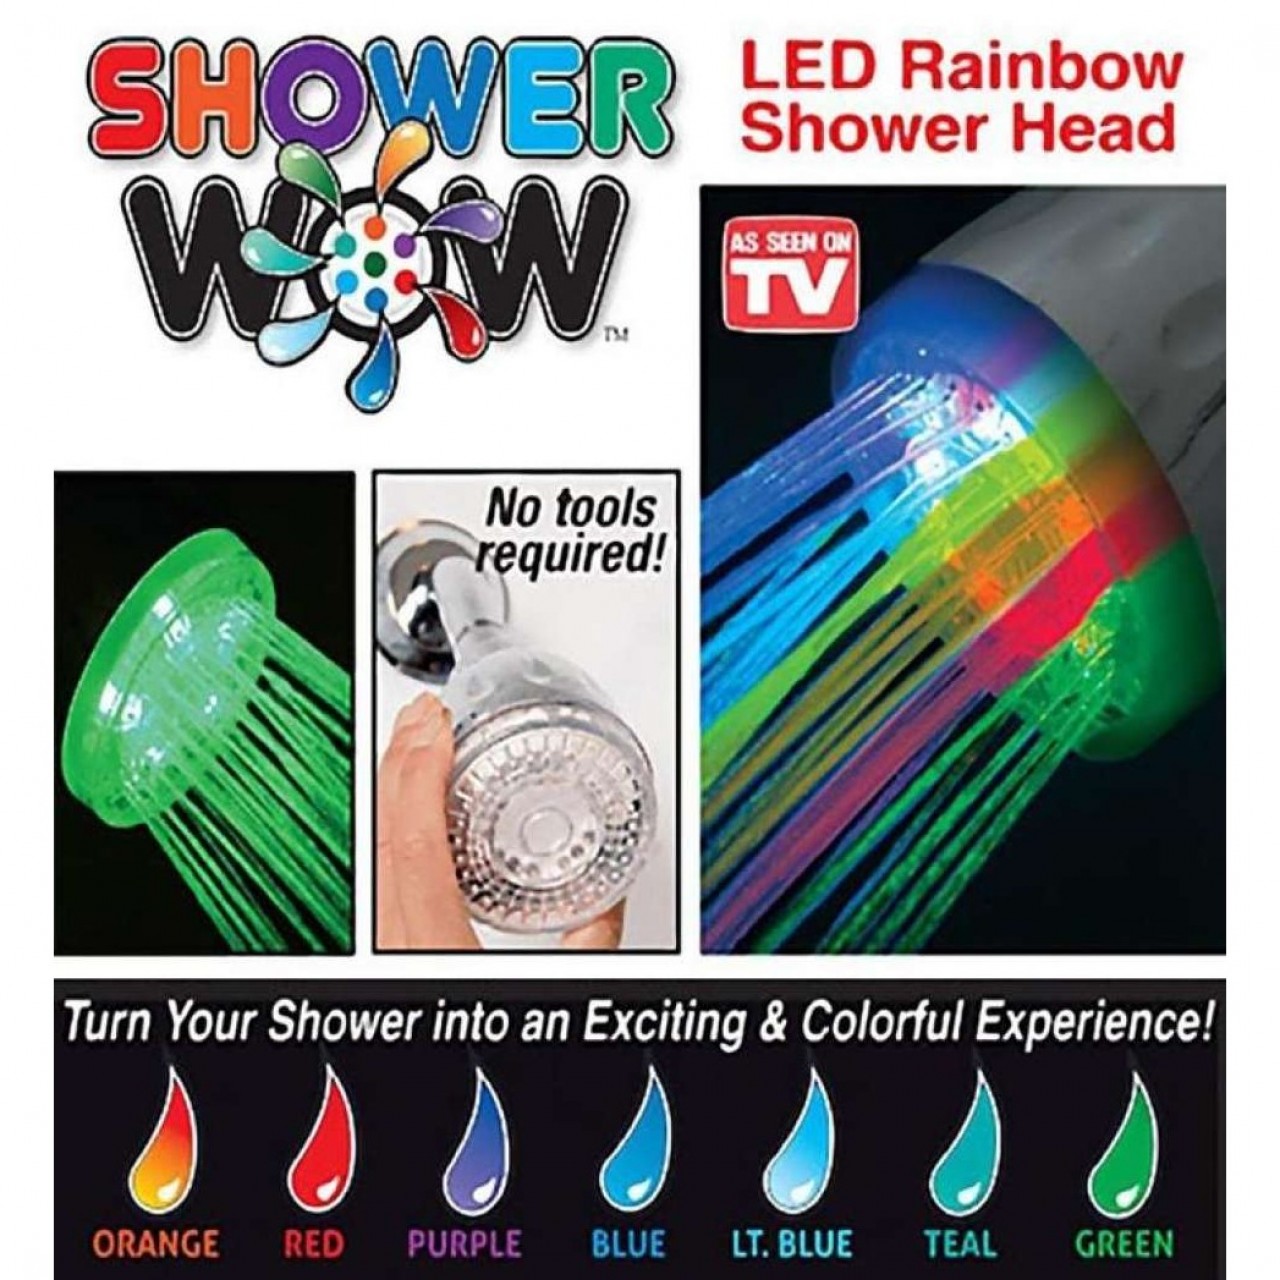 Shower Wow Led Rainbow